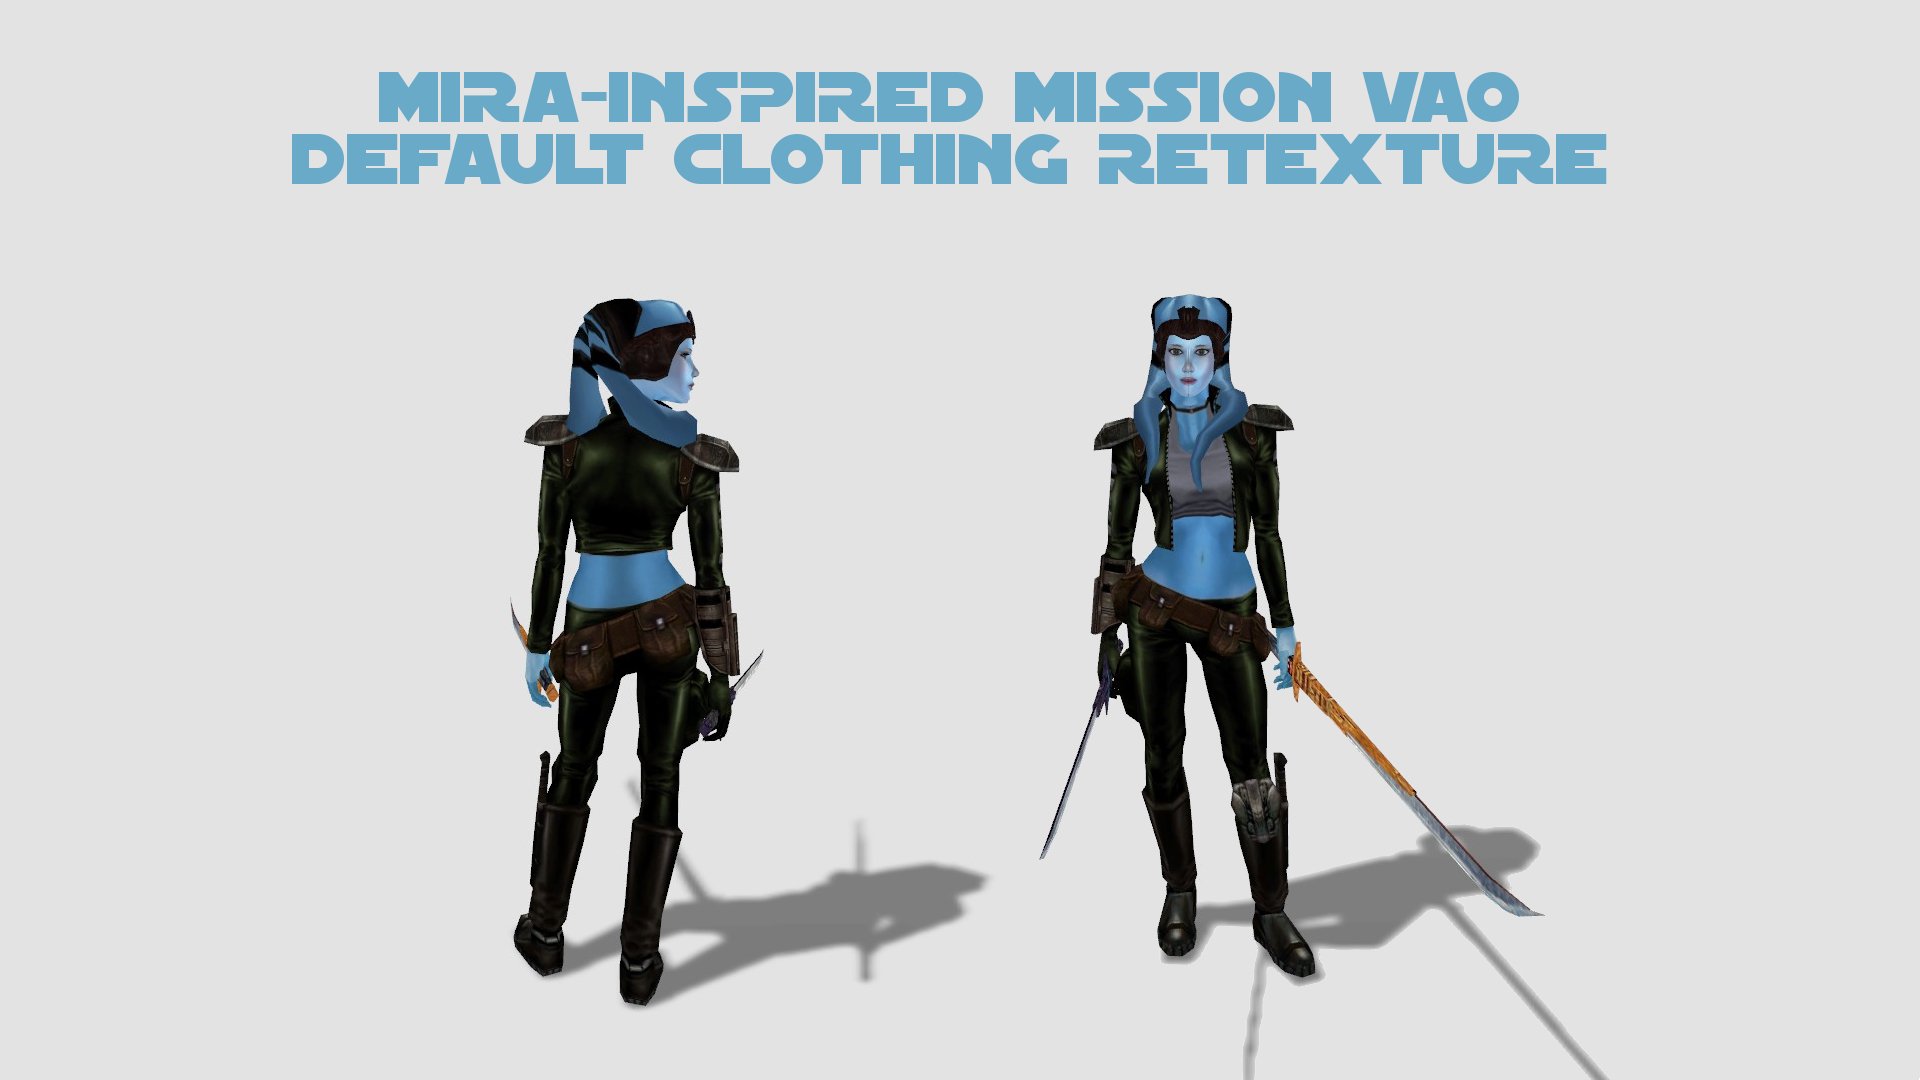 Mira-INSPIRED Default Clothing Reskin for Mission Vao.